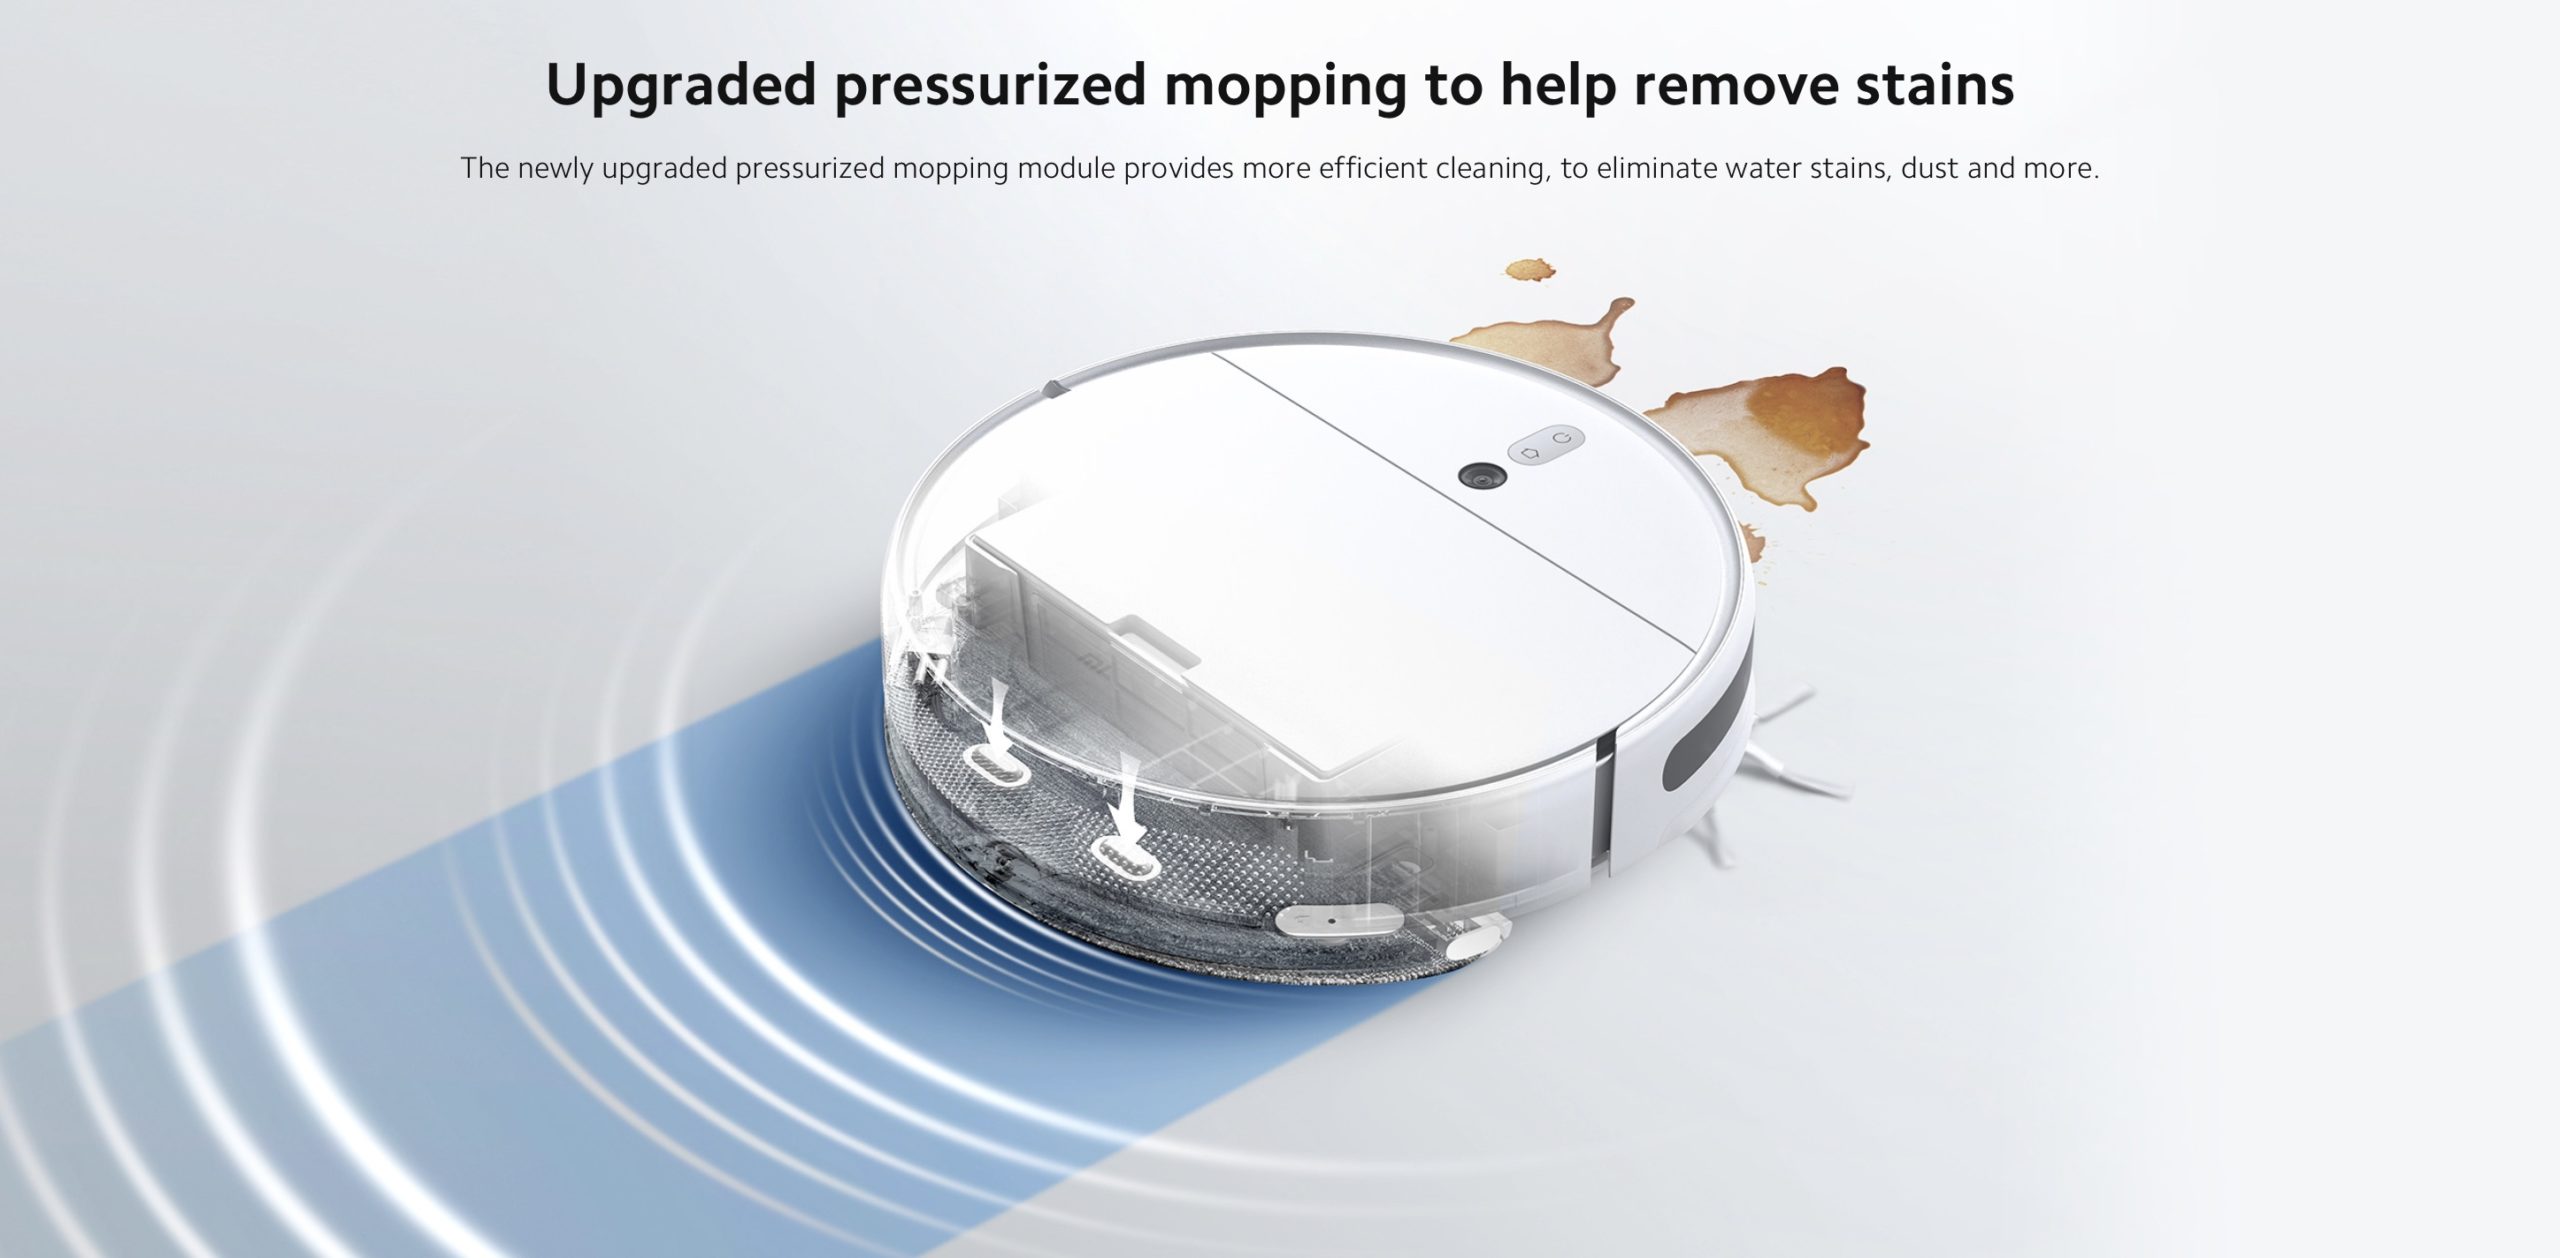 DirectD Retail & Wholesale Sdn. Bhd. - Online Store. XIAOMI Mi Robot Vacuum  Mop 2 - PROMO RM899🔥